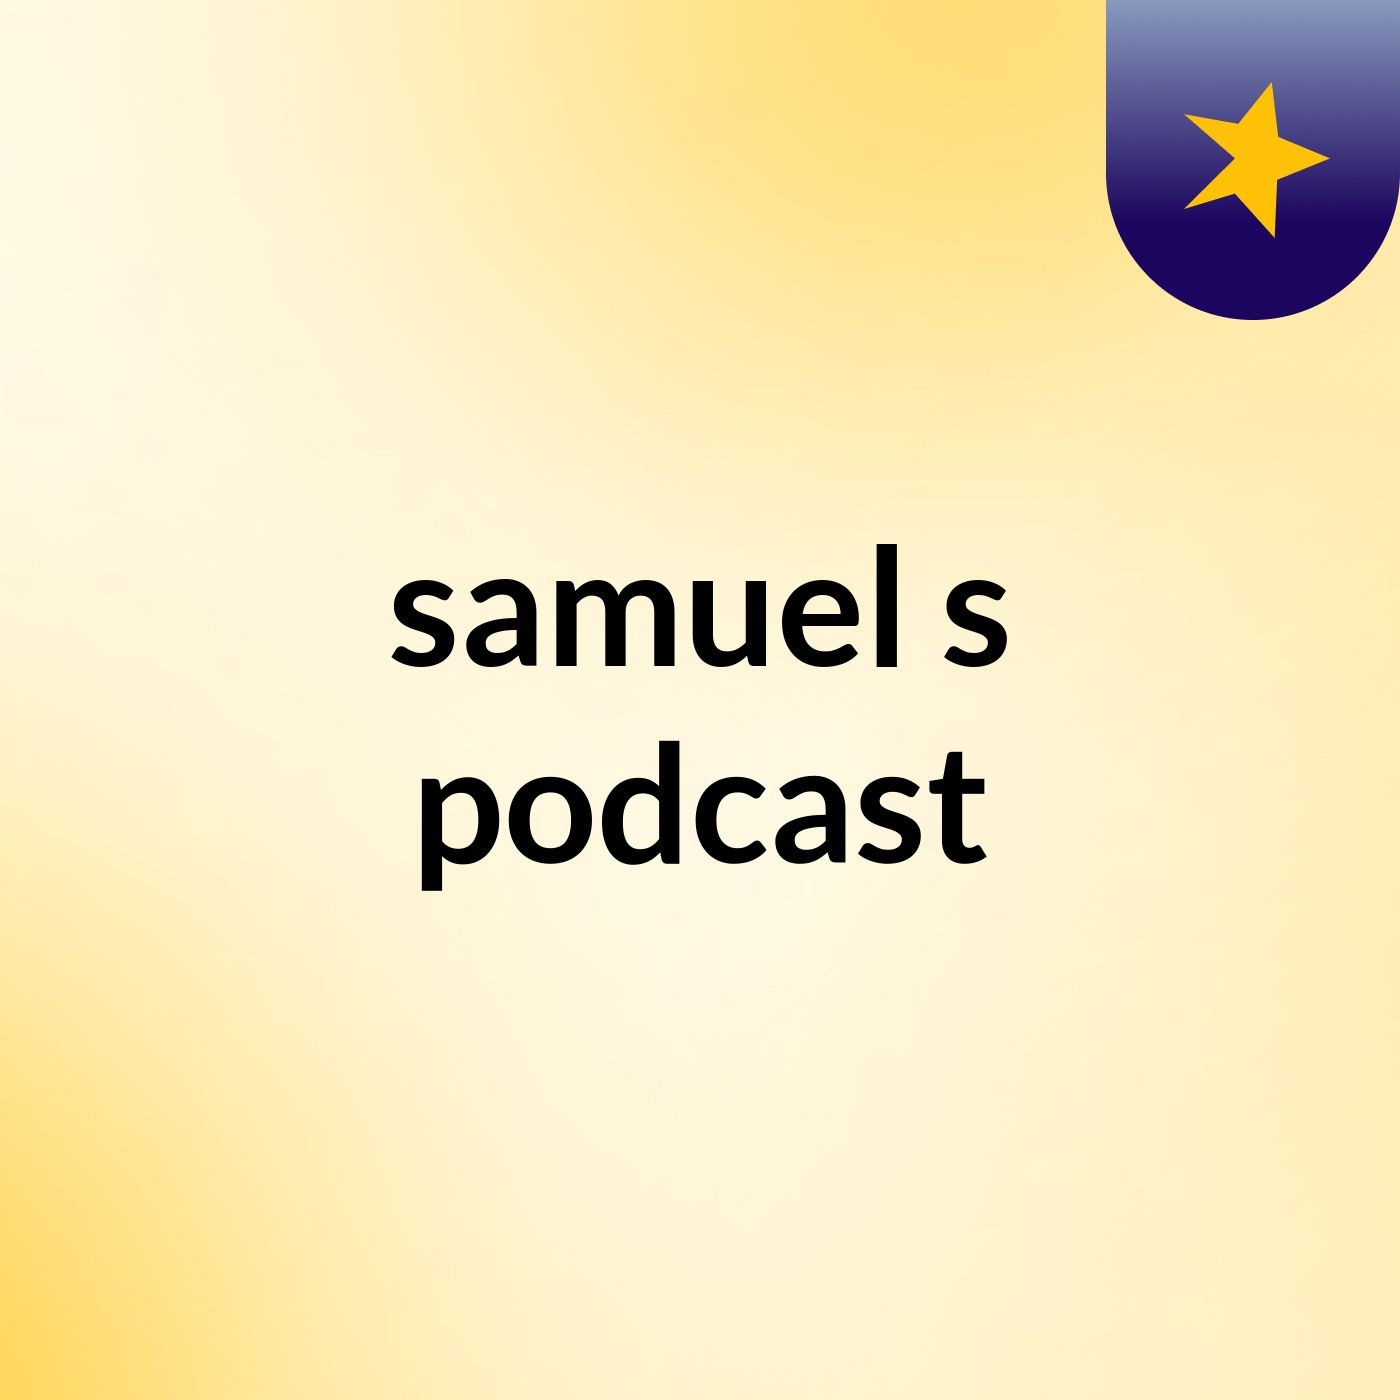 Episode 3 - samuel's podcast